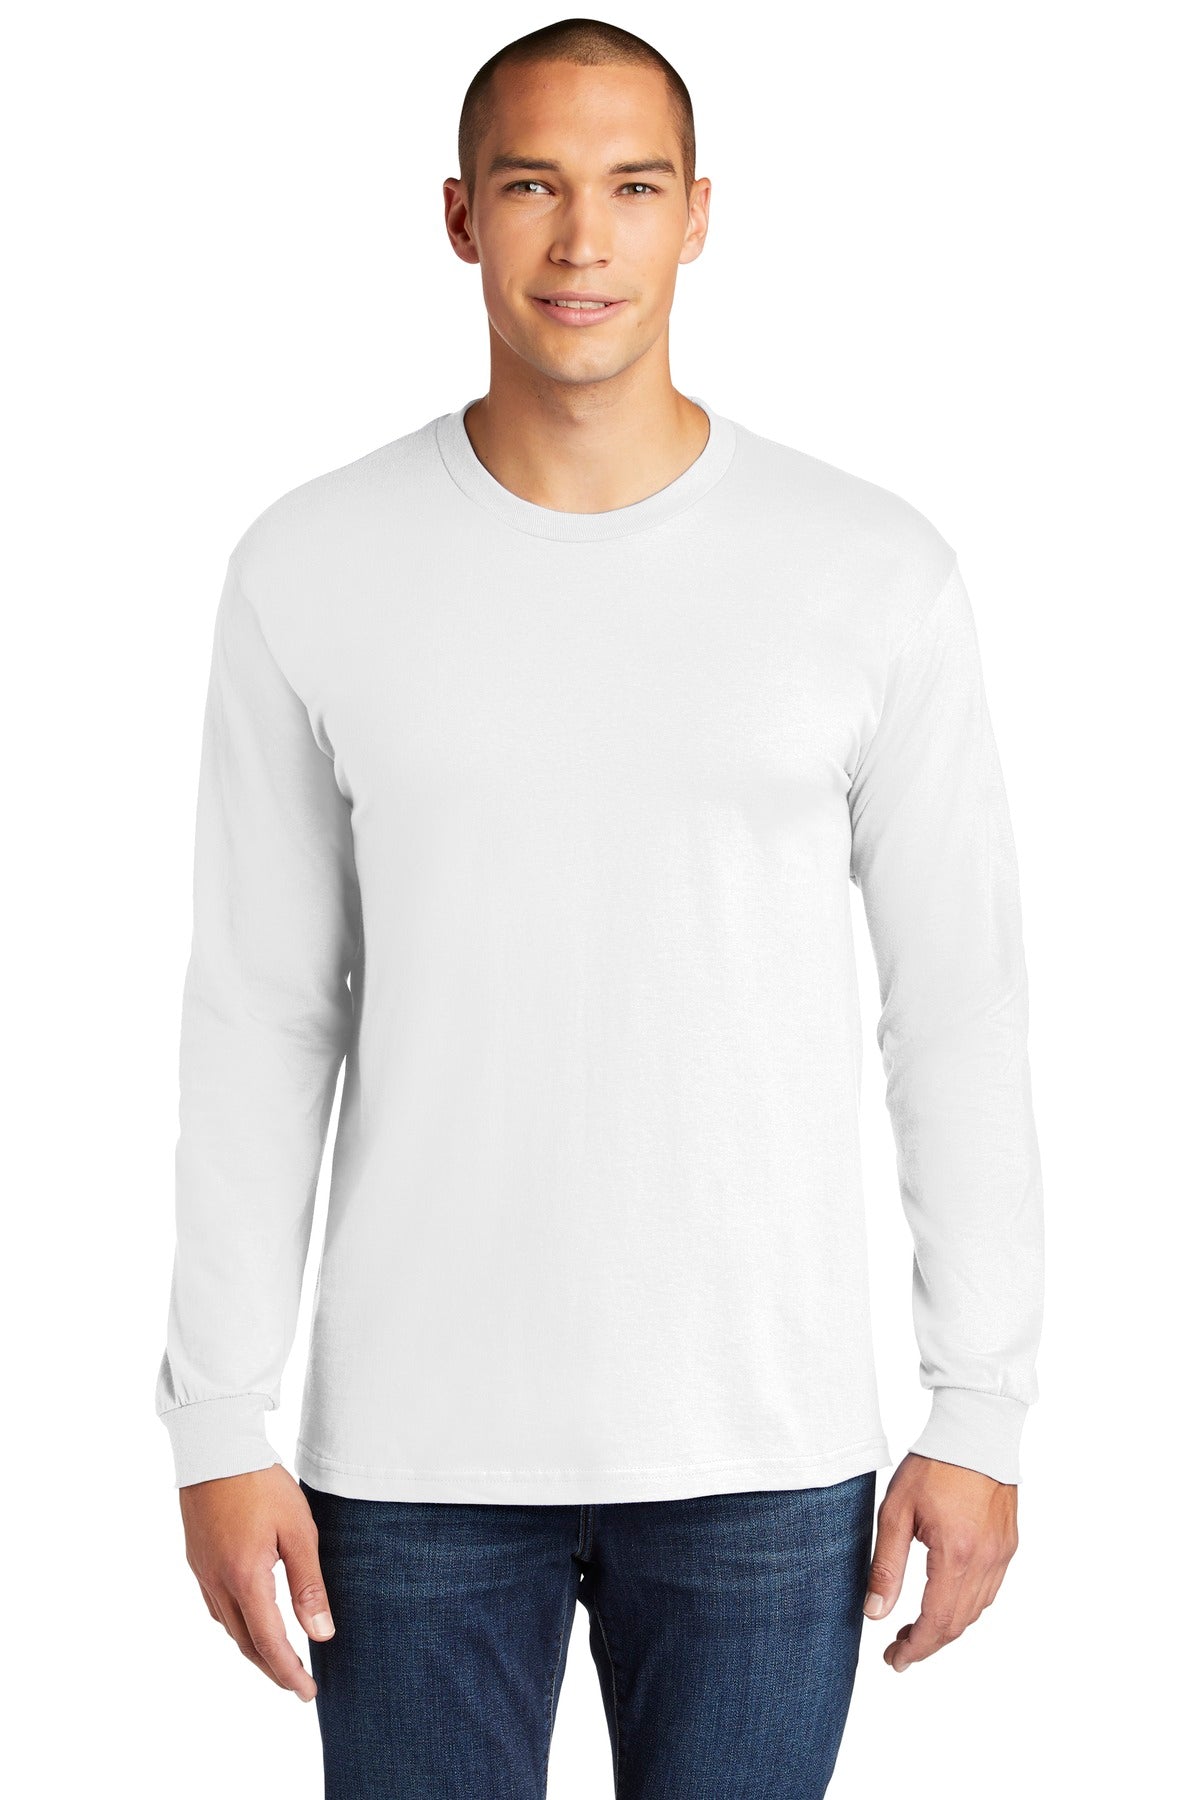 T-shirt White Gildan